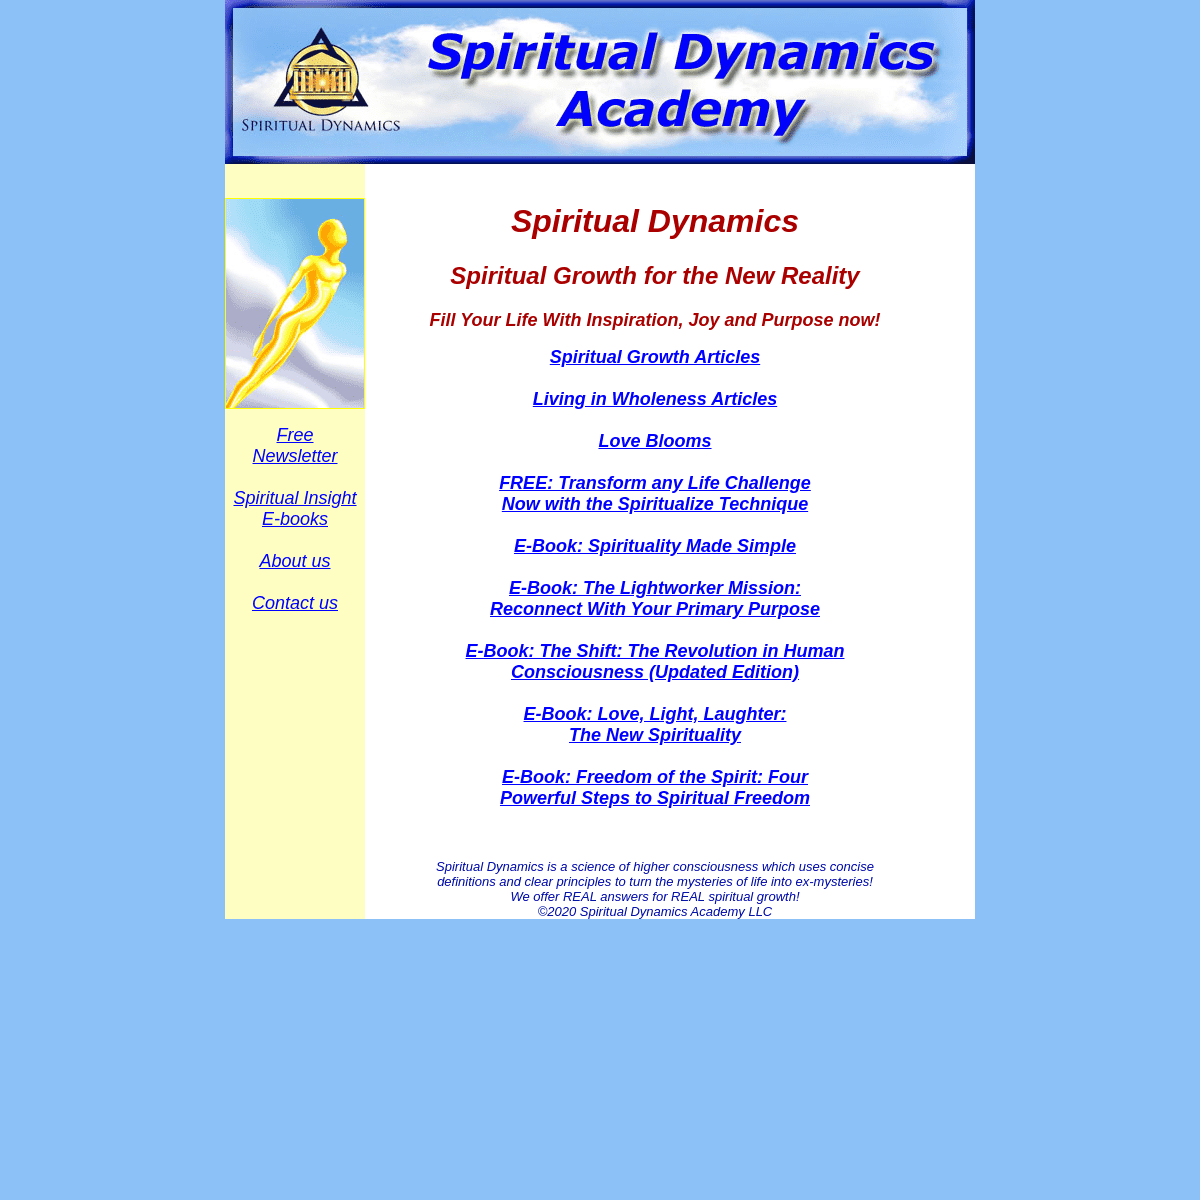 A complete backup of spiritualdynamics.net